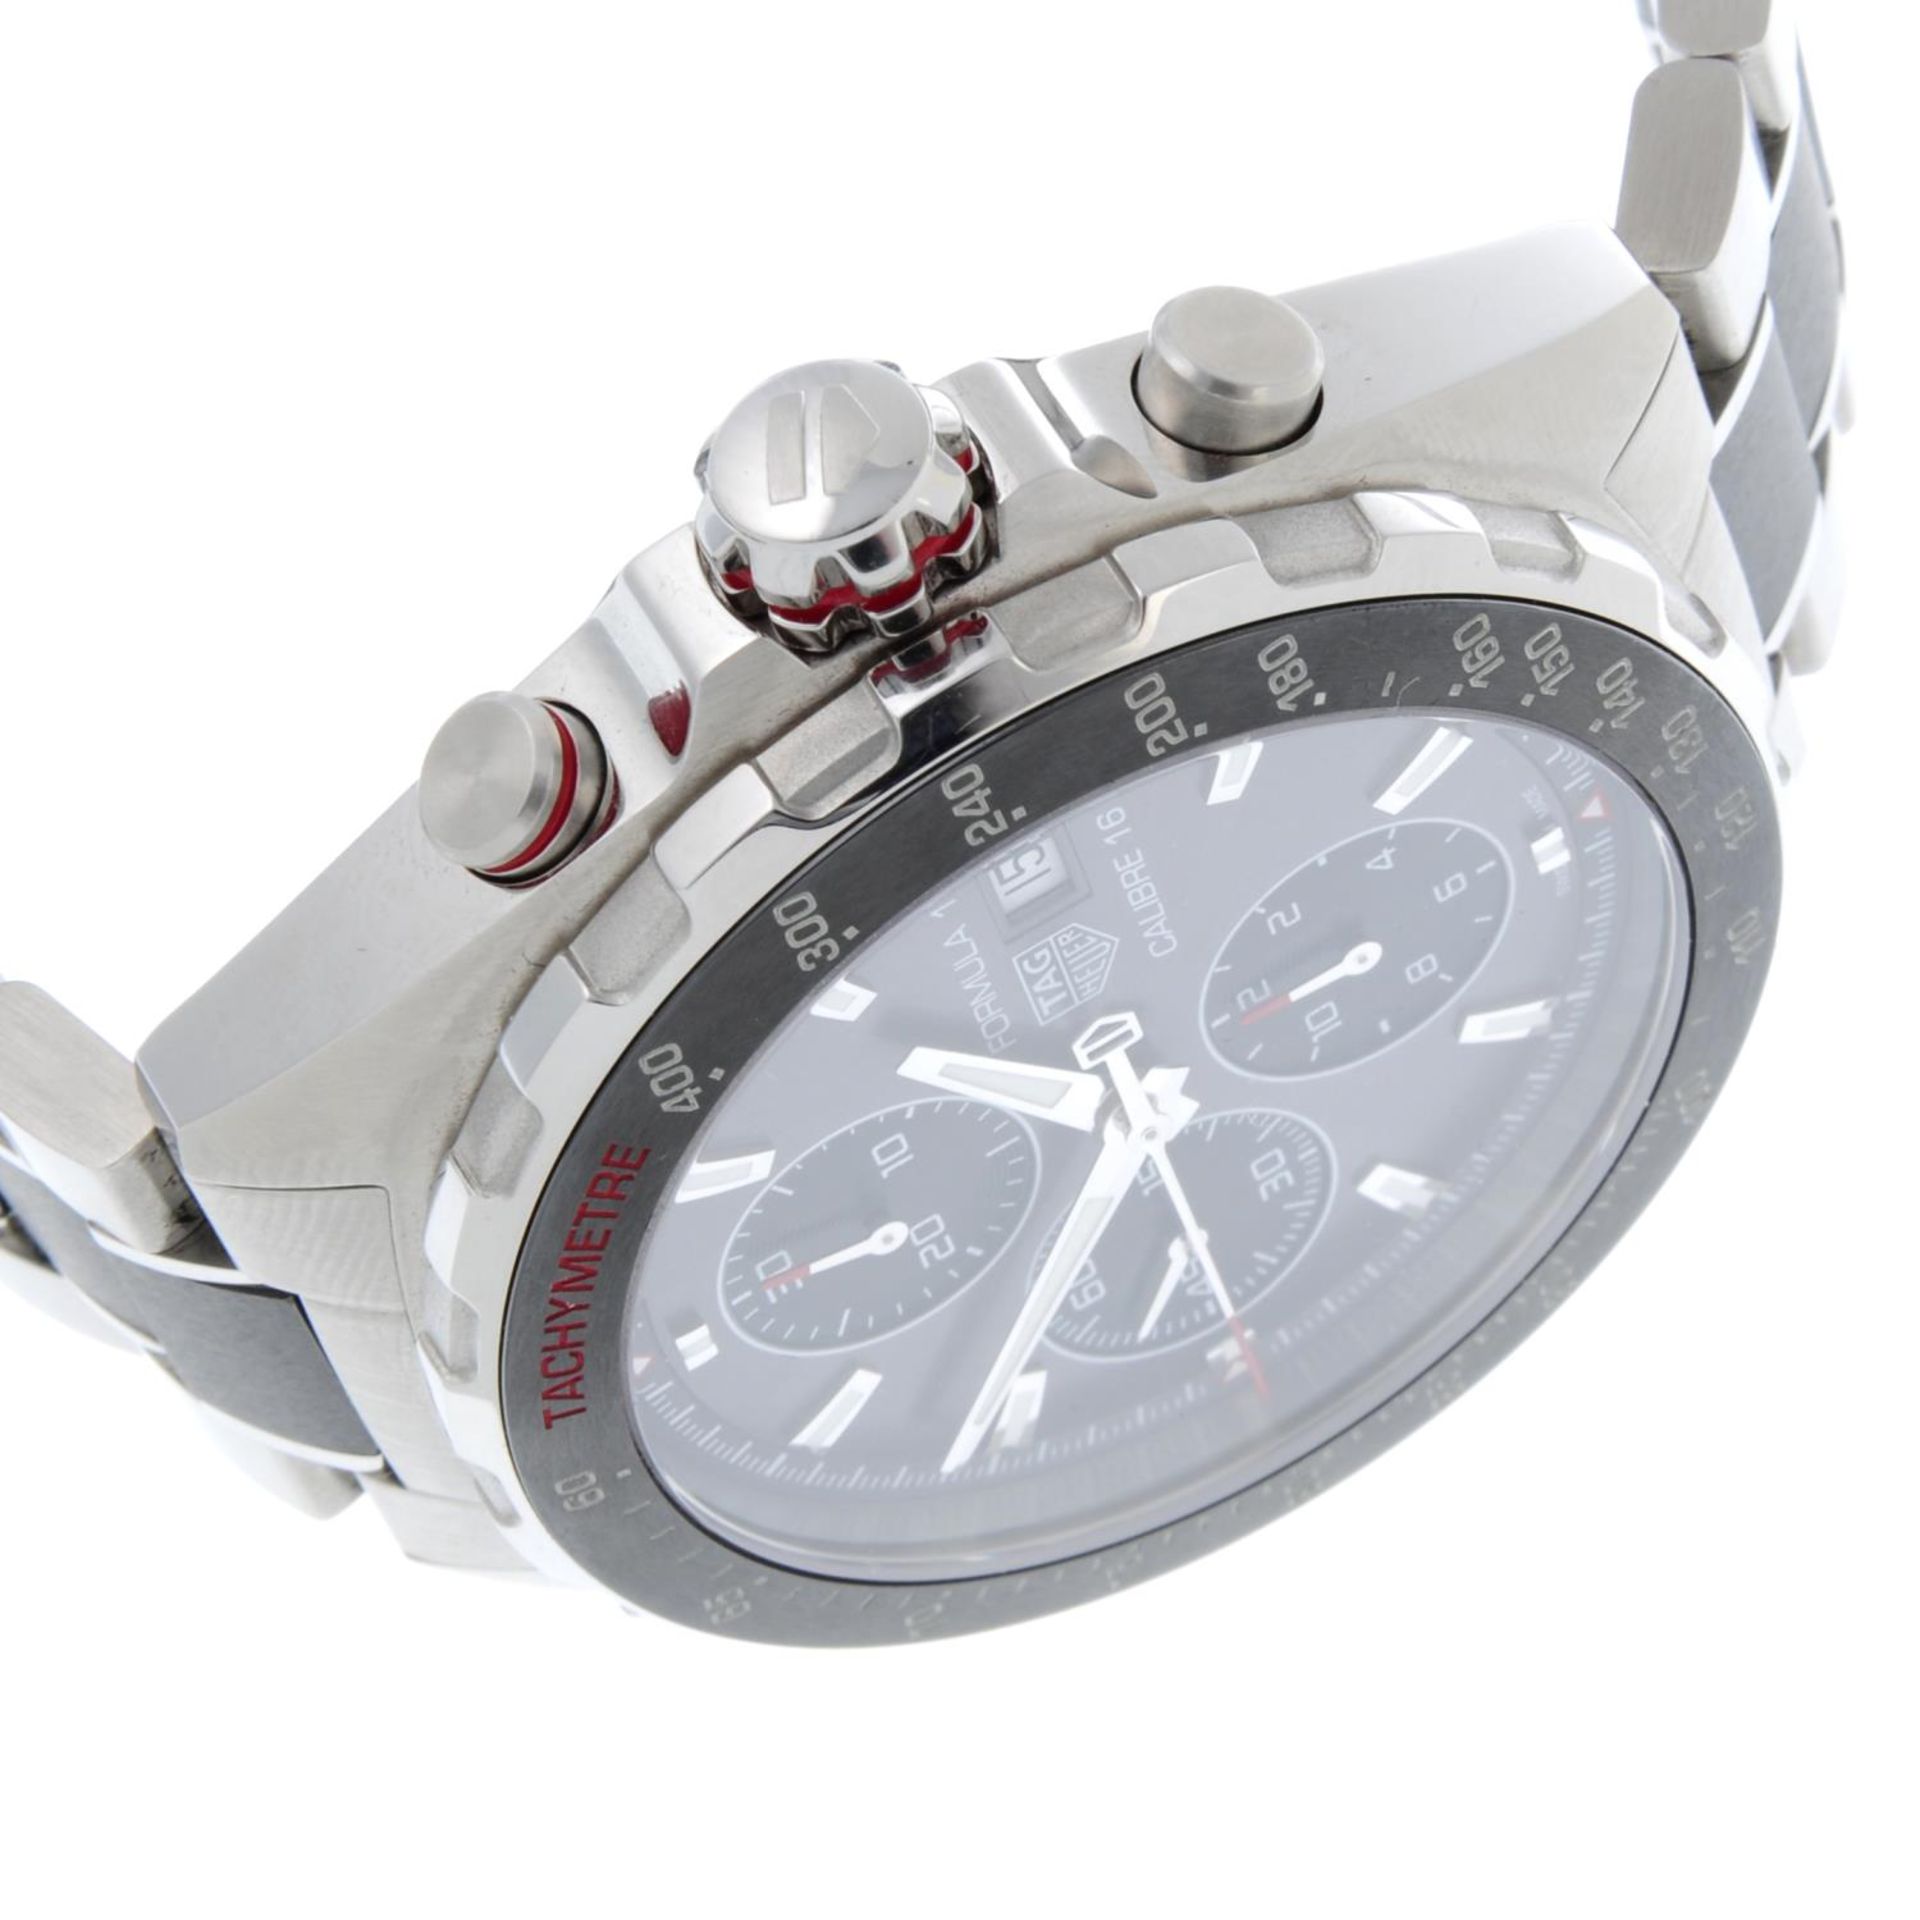 TAG HEUER - a Formula 1 chronographbracelet watch. - Image 3 of 4